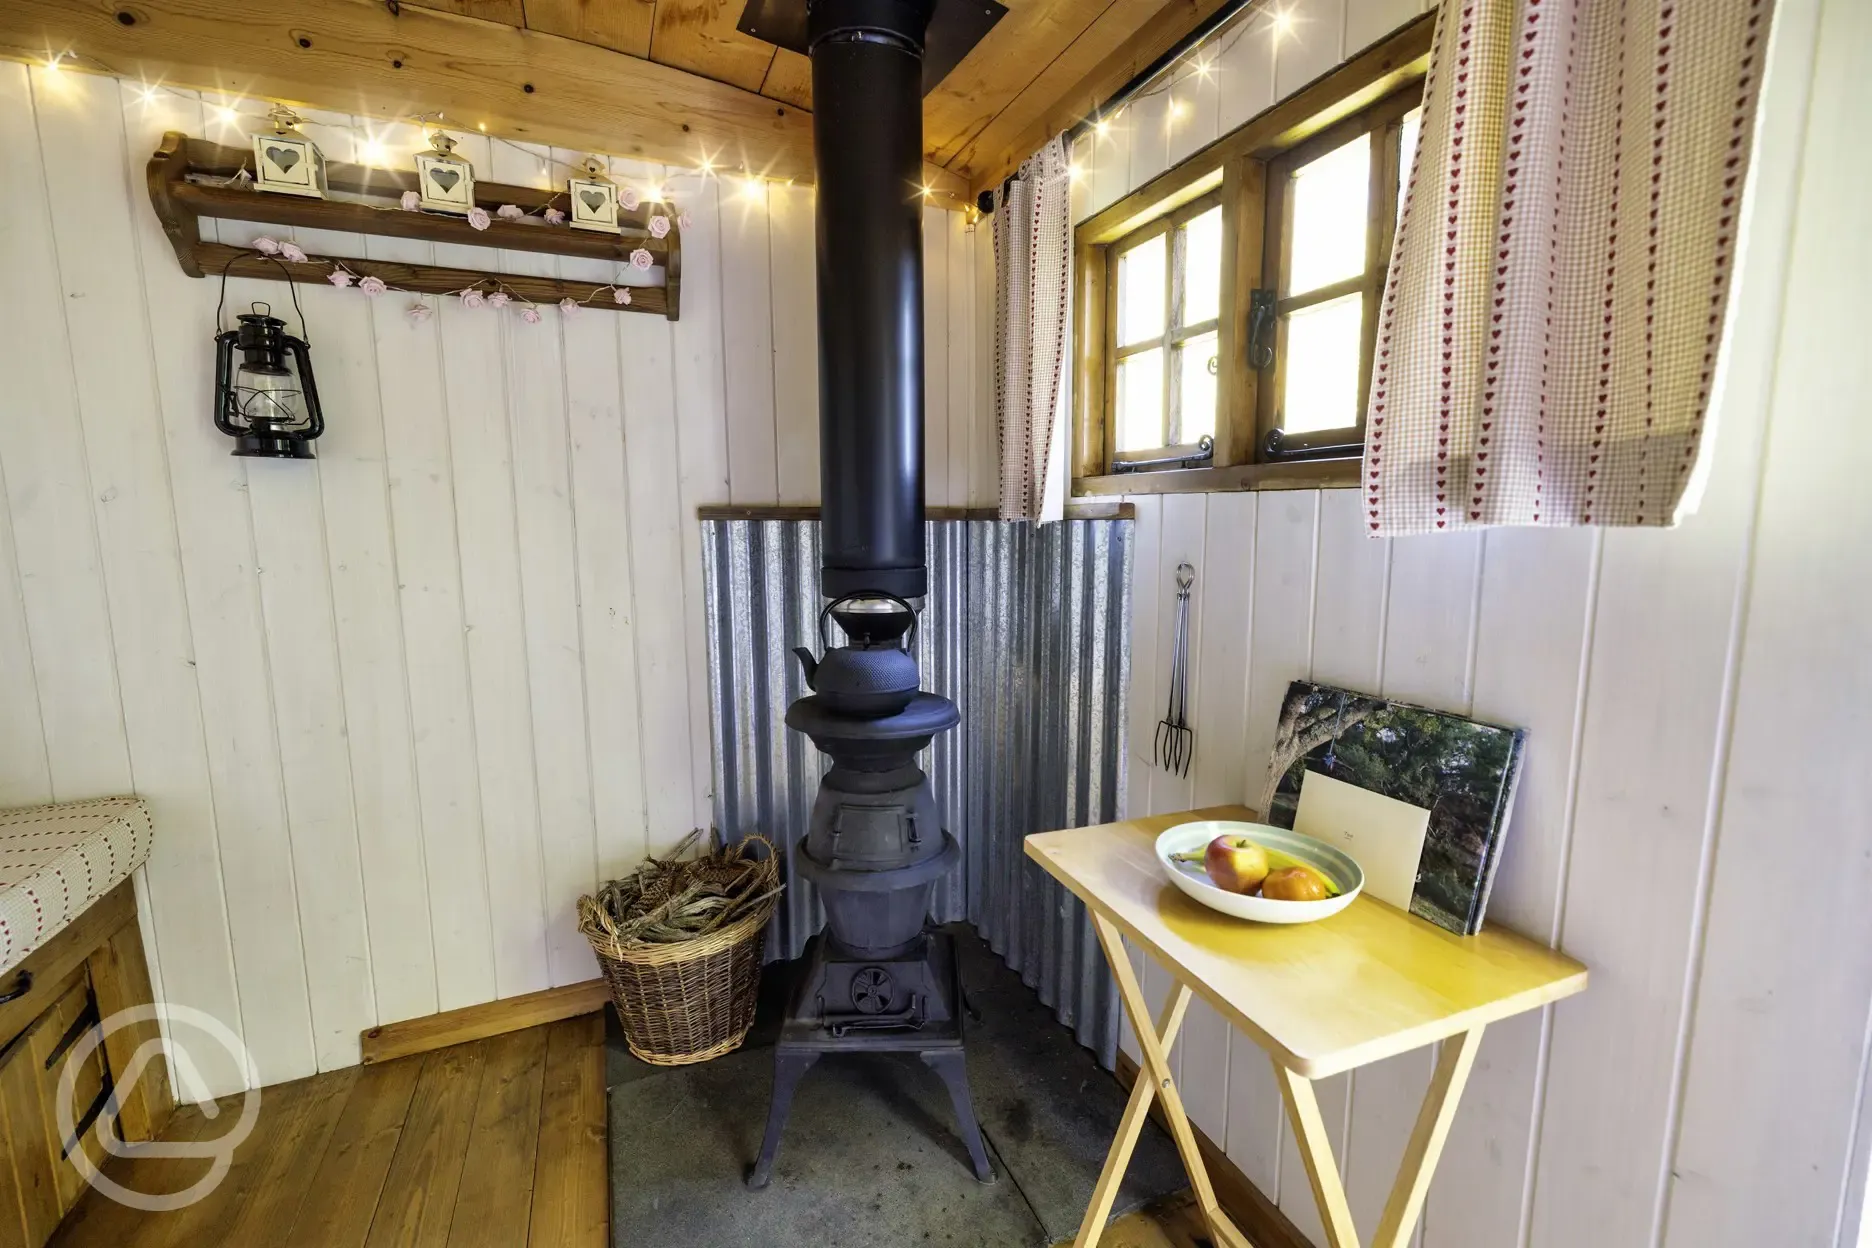 Shepherd's hut wood burner